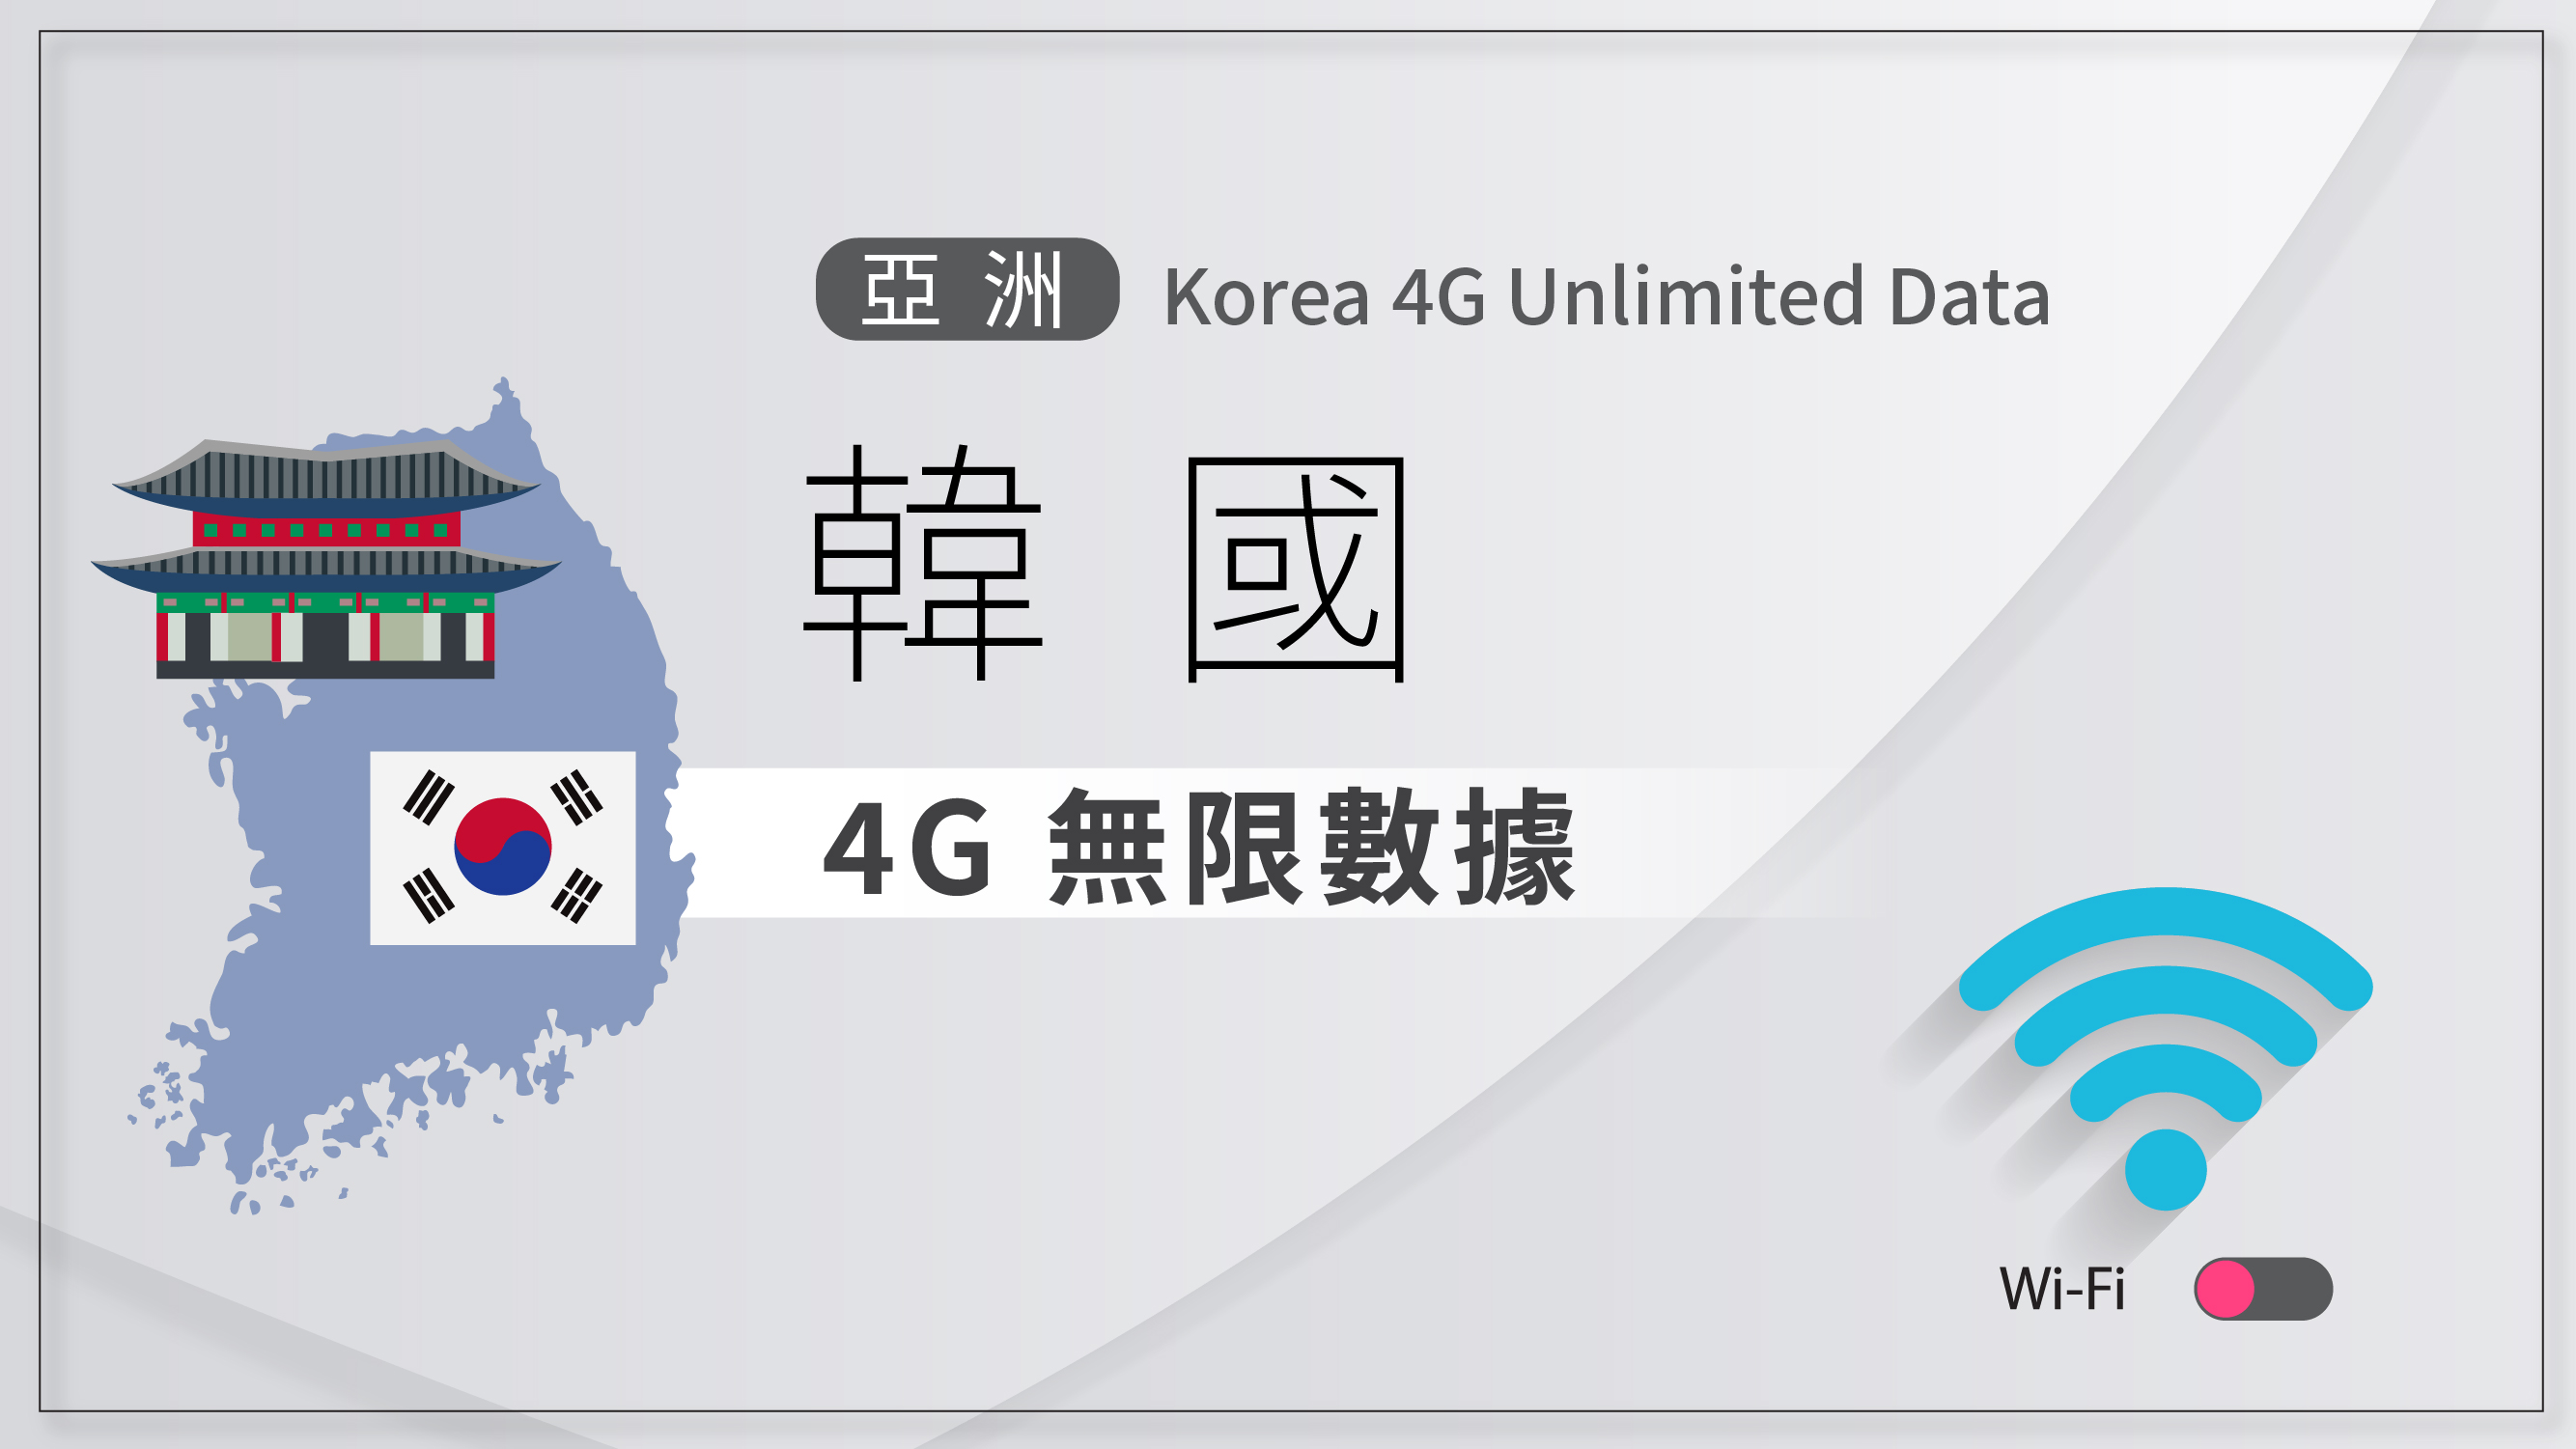 NEXT WIFI_Korea 4G unlimited data